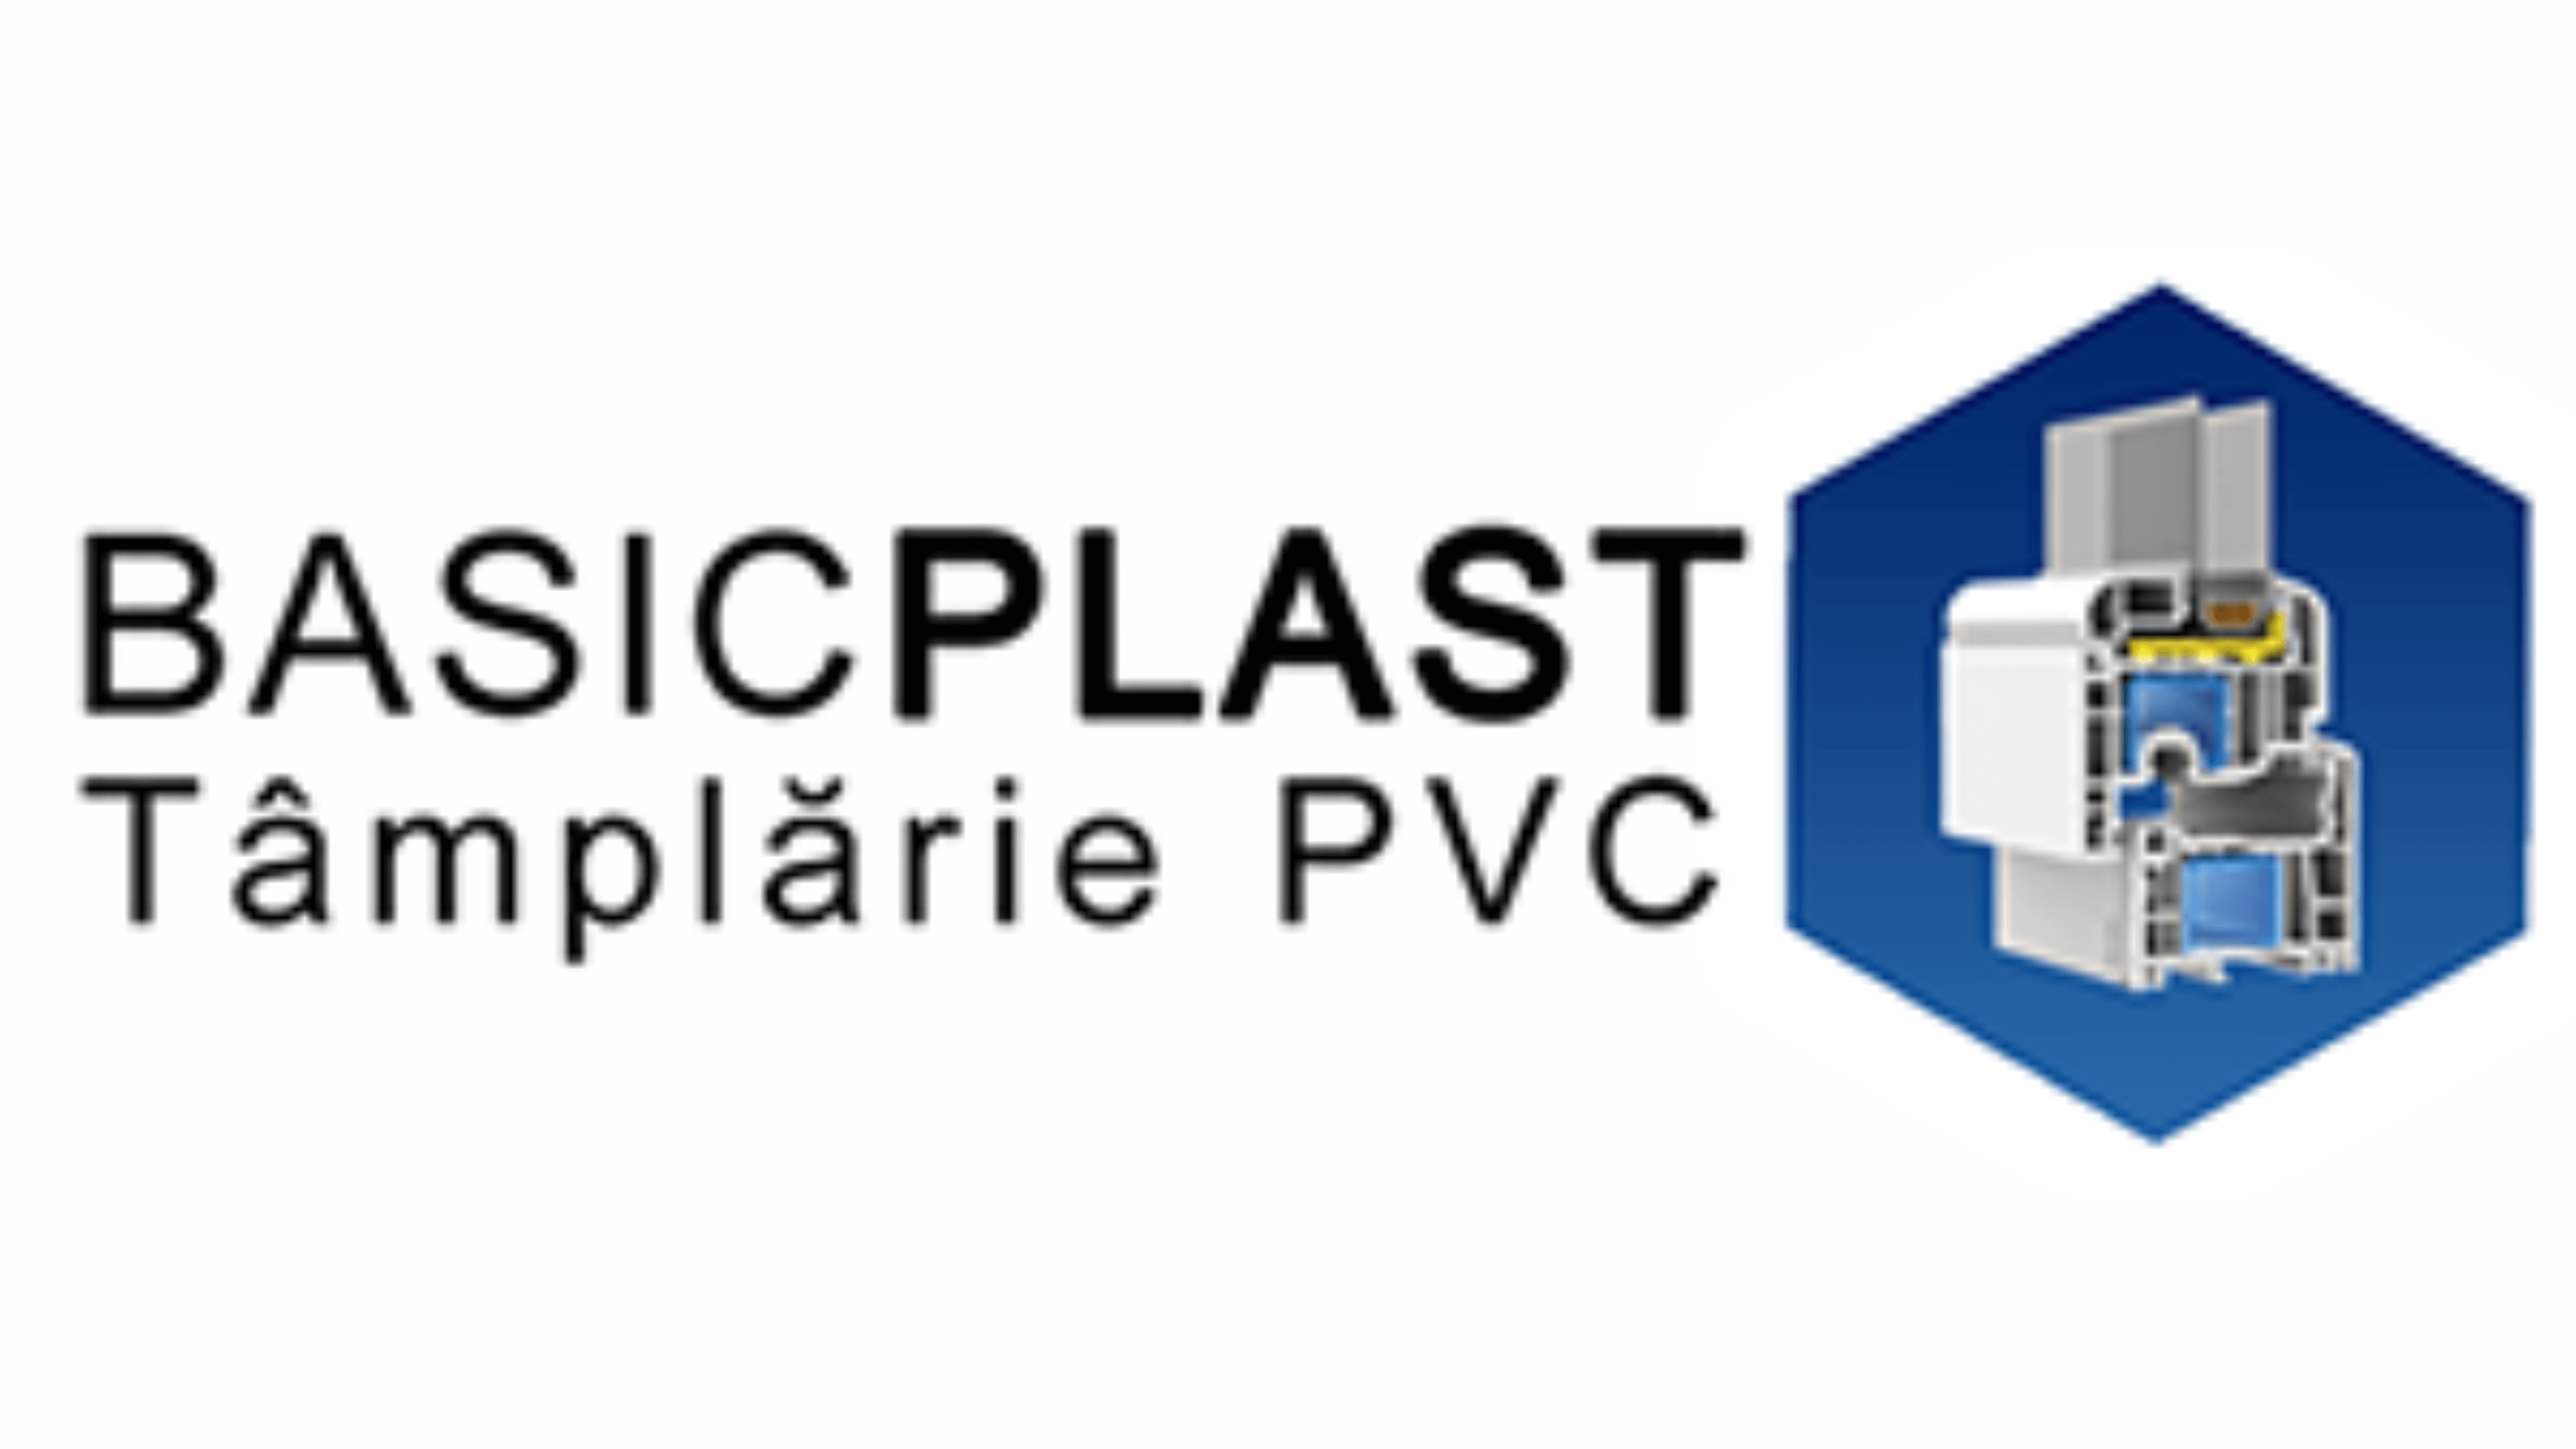 BasicPlast